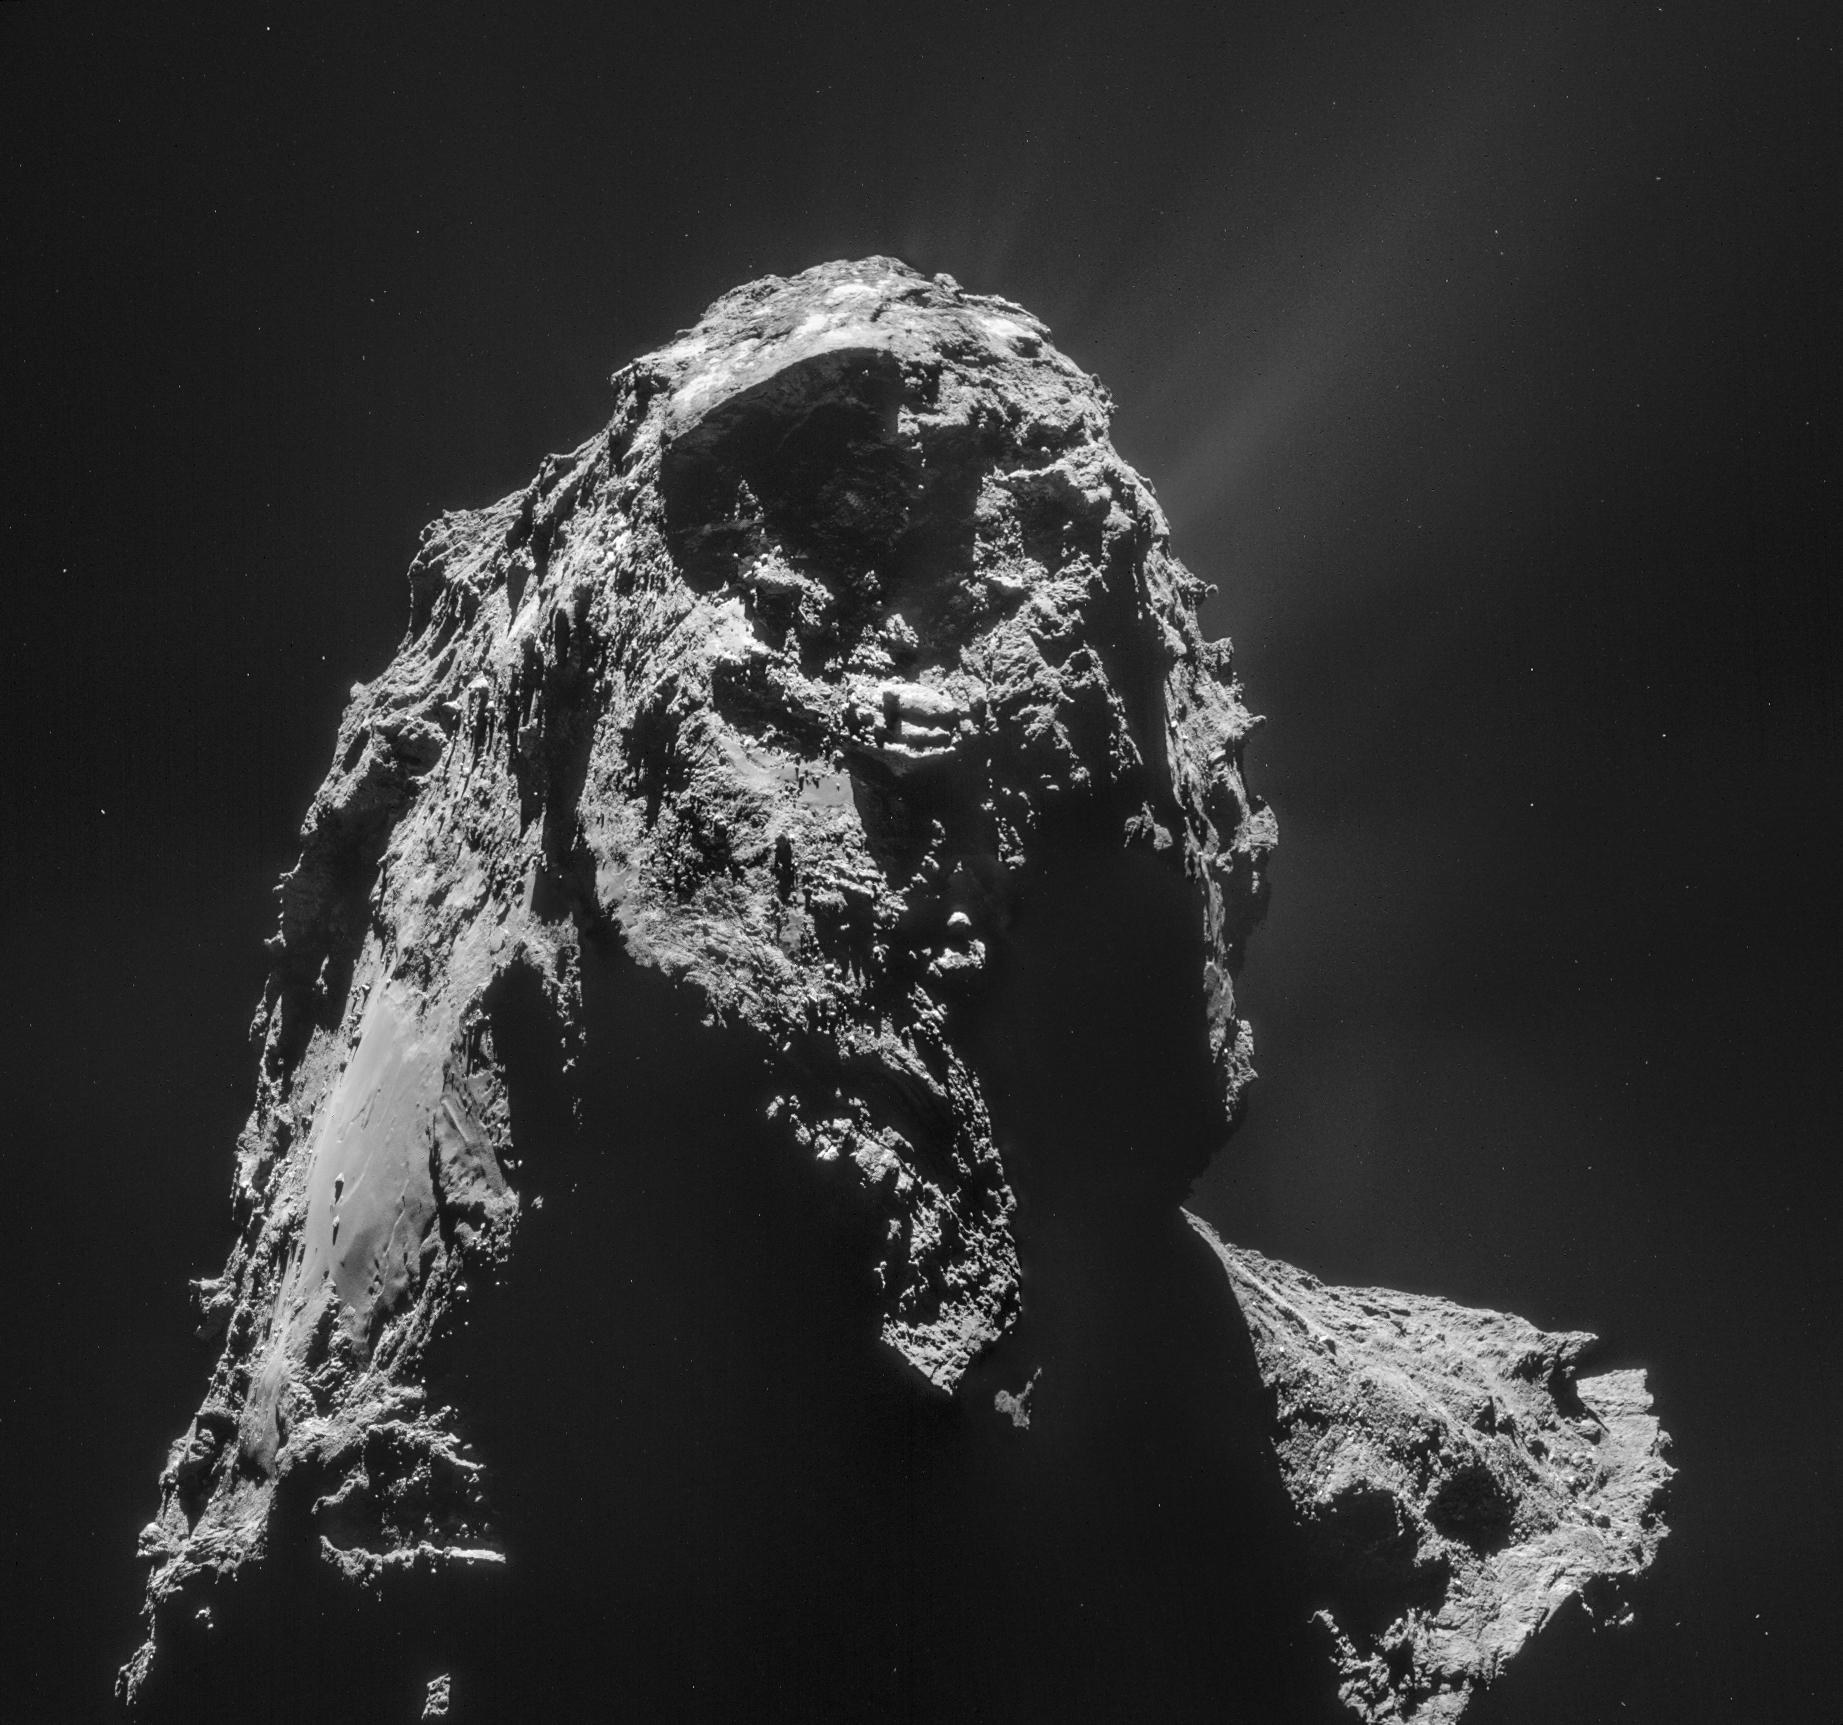 Comet on 16 January 2015